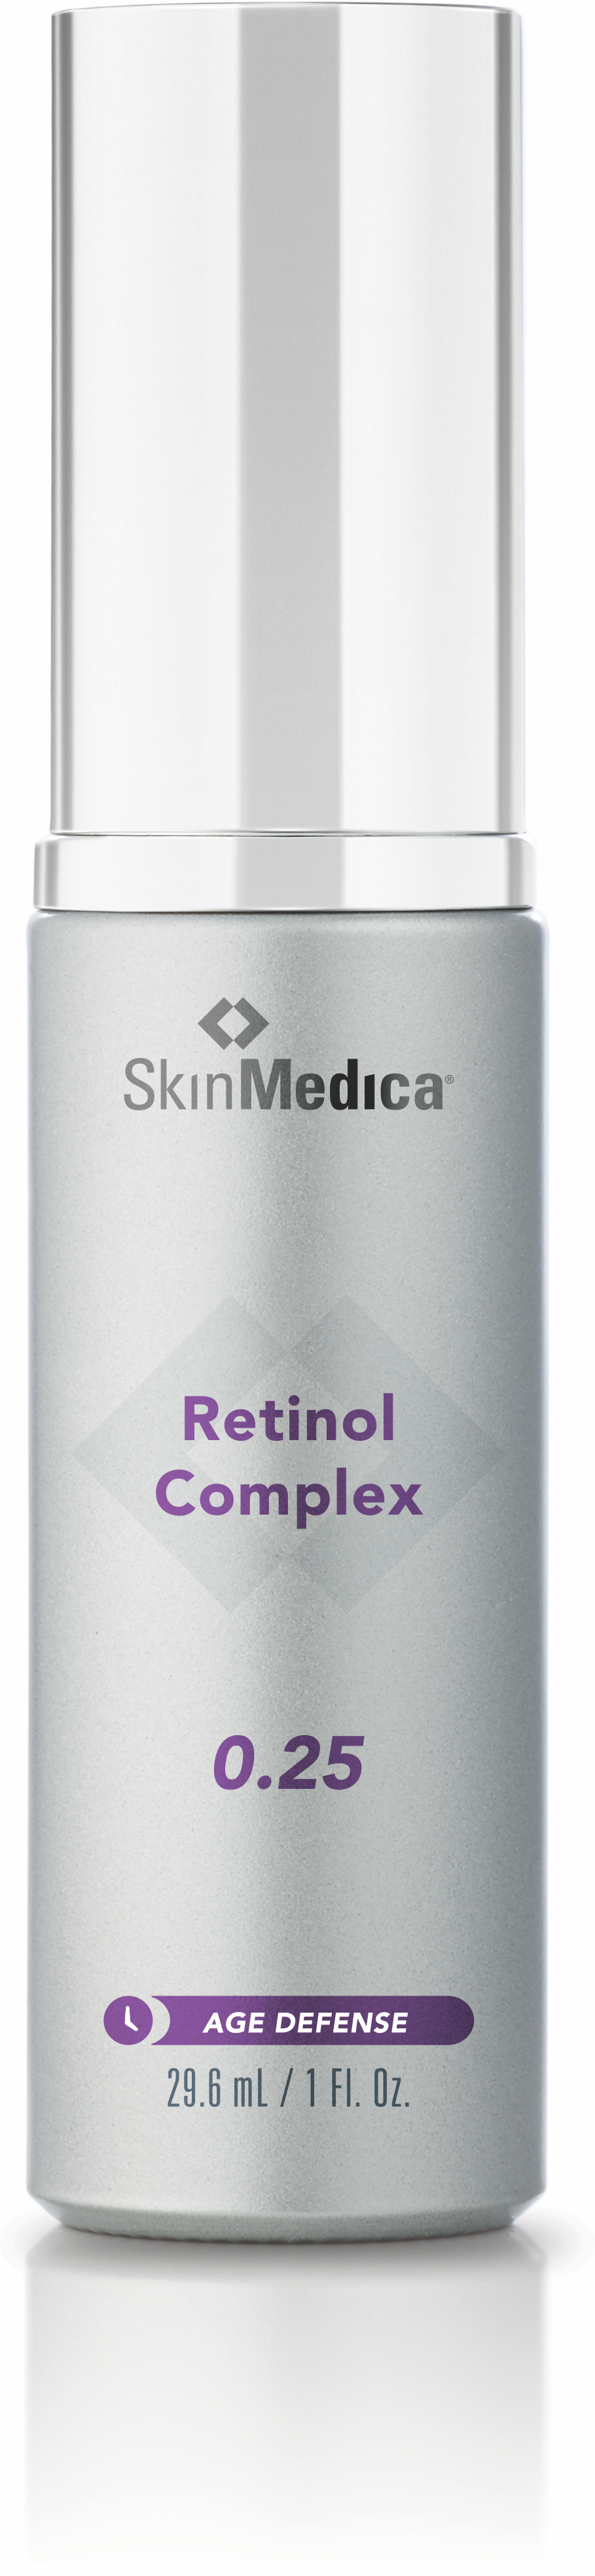 SkinMedica® Retinol Complex 0.25%